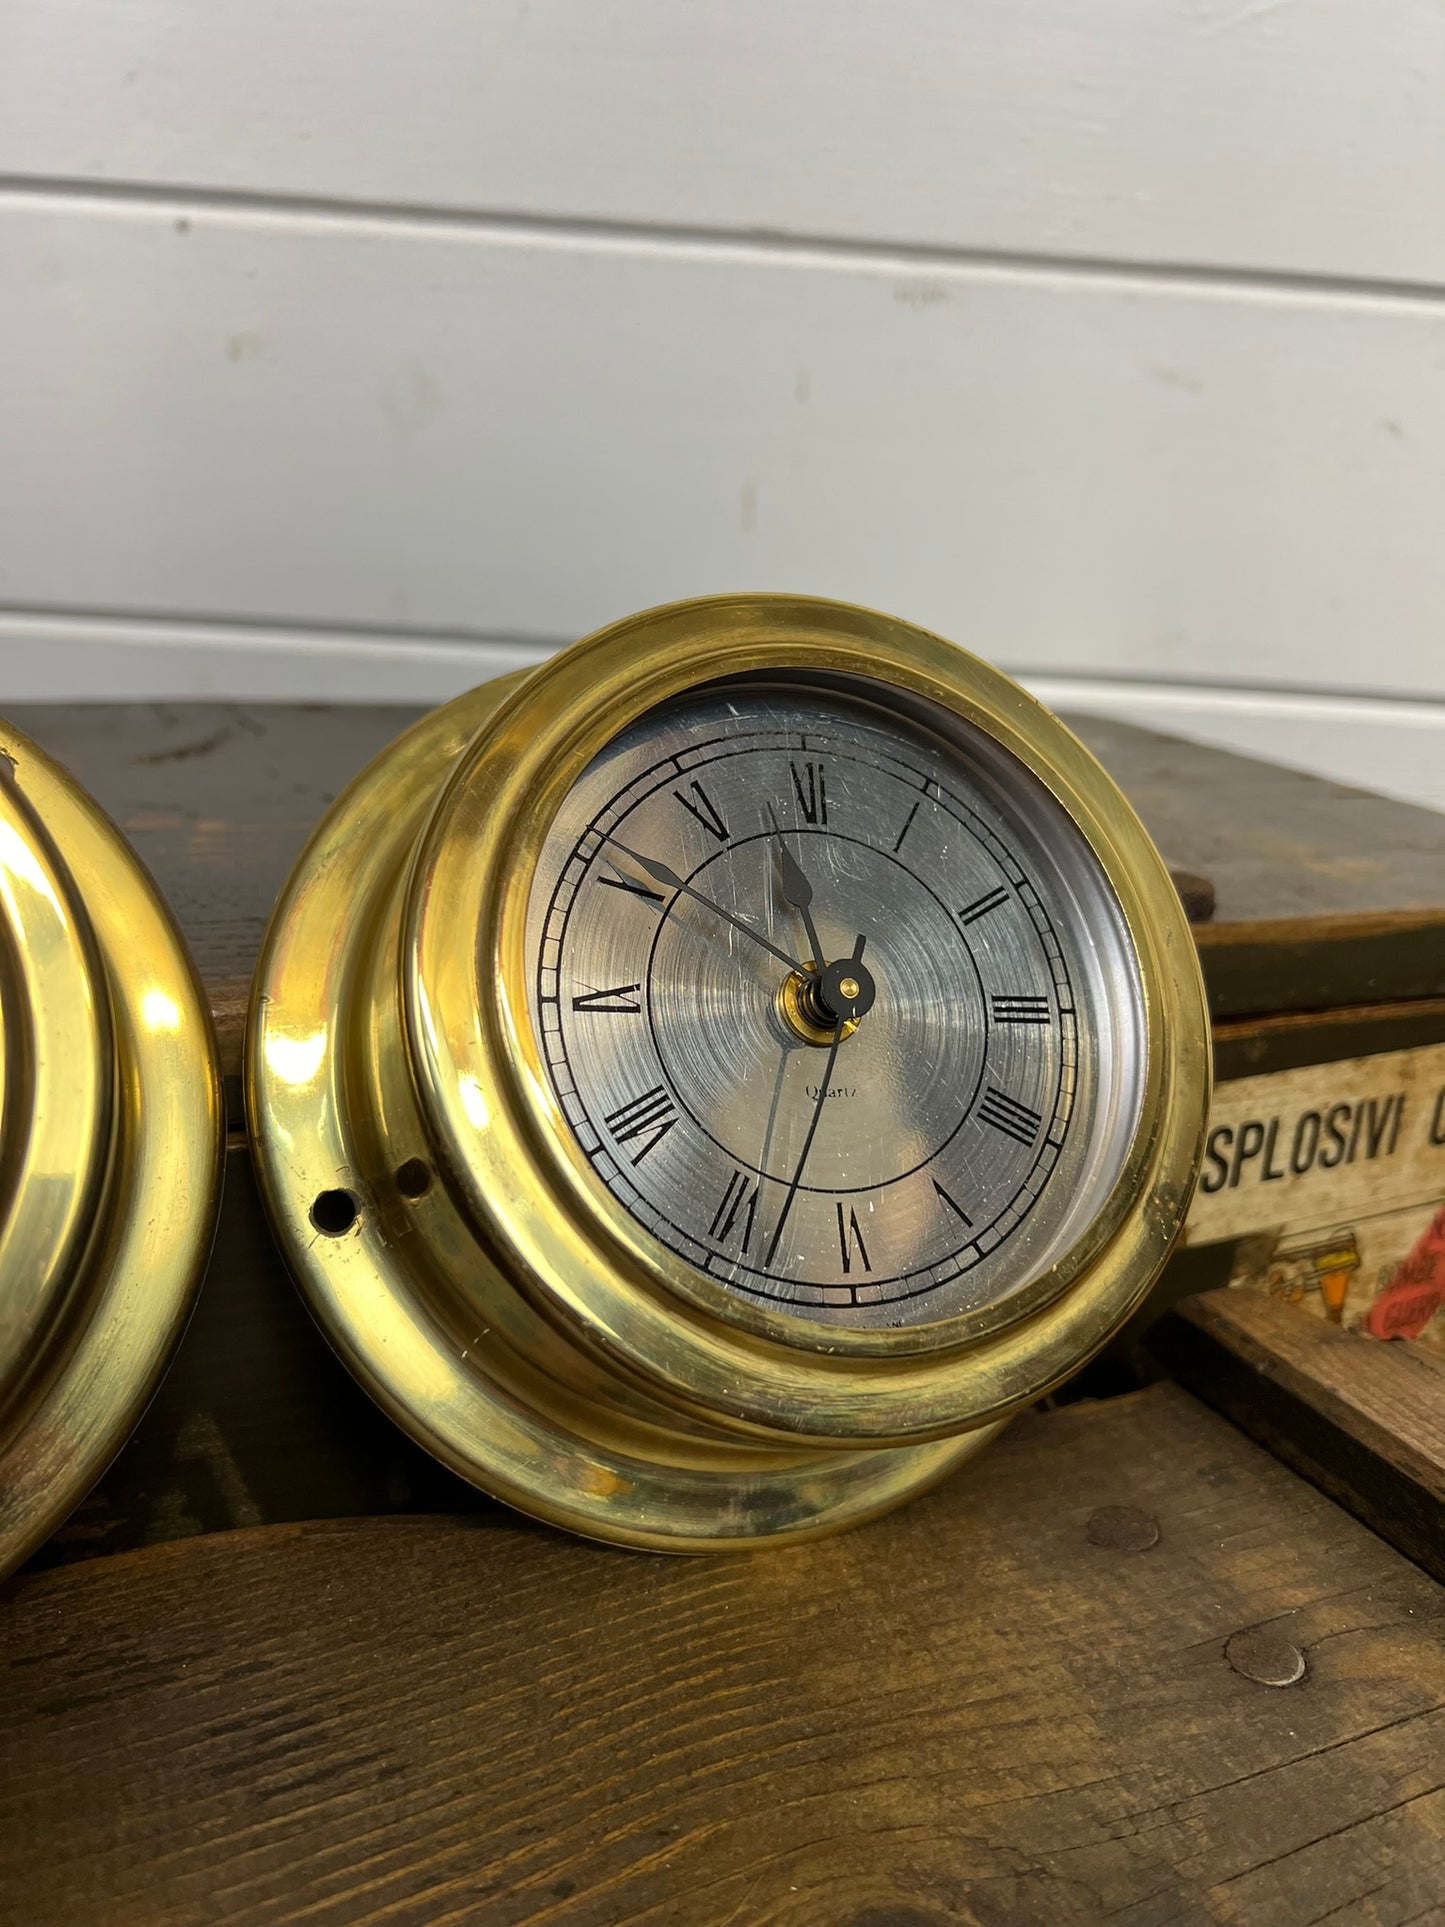 Vintage Brass Ships Barometer & Clock Nautical Marine Decor Display